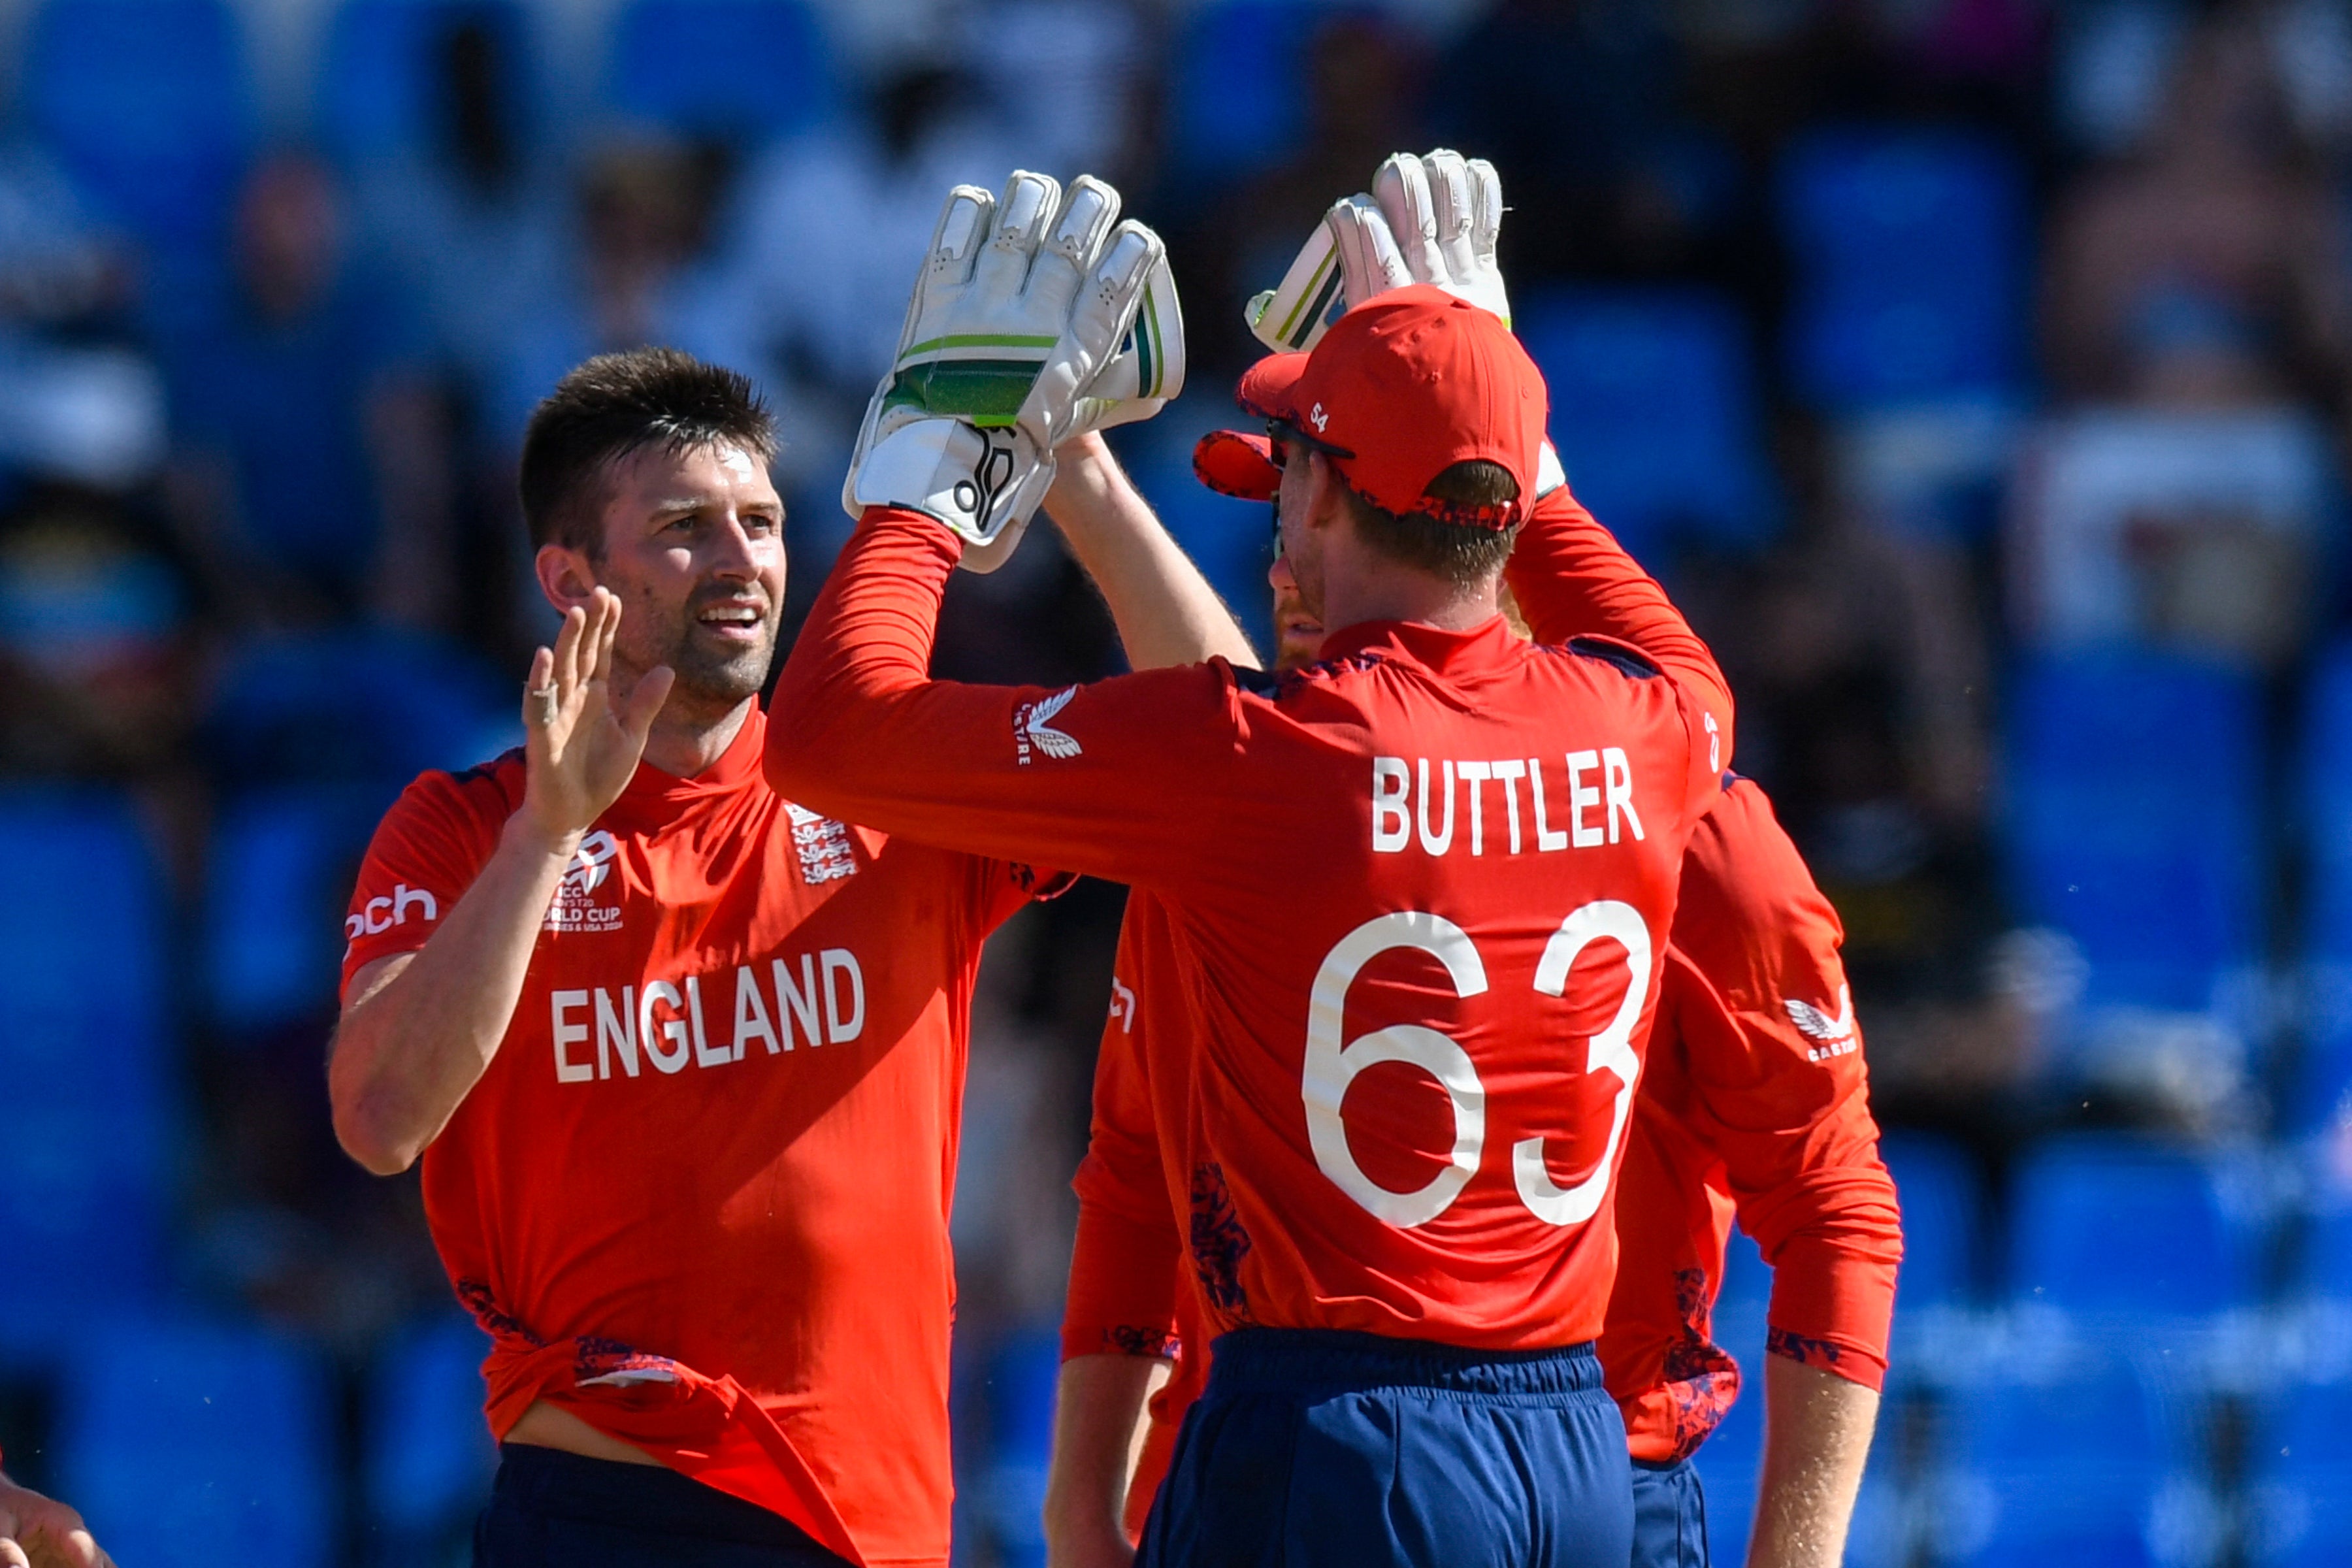 Mark Wood helped England tear through the Oman batting line-up